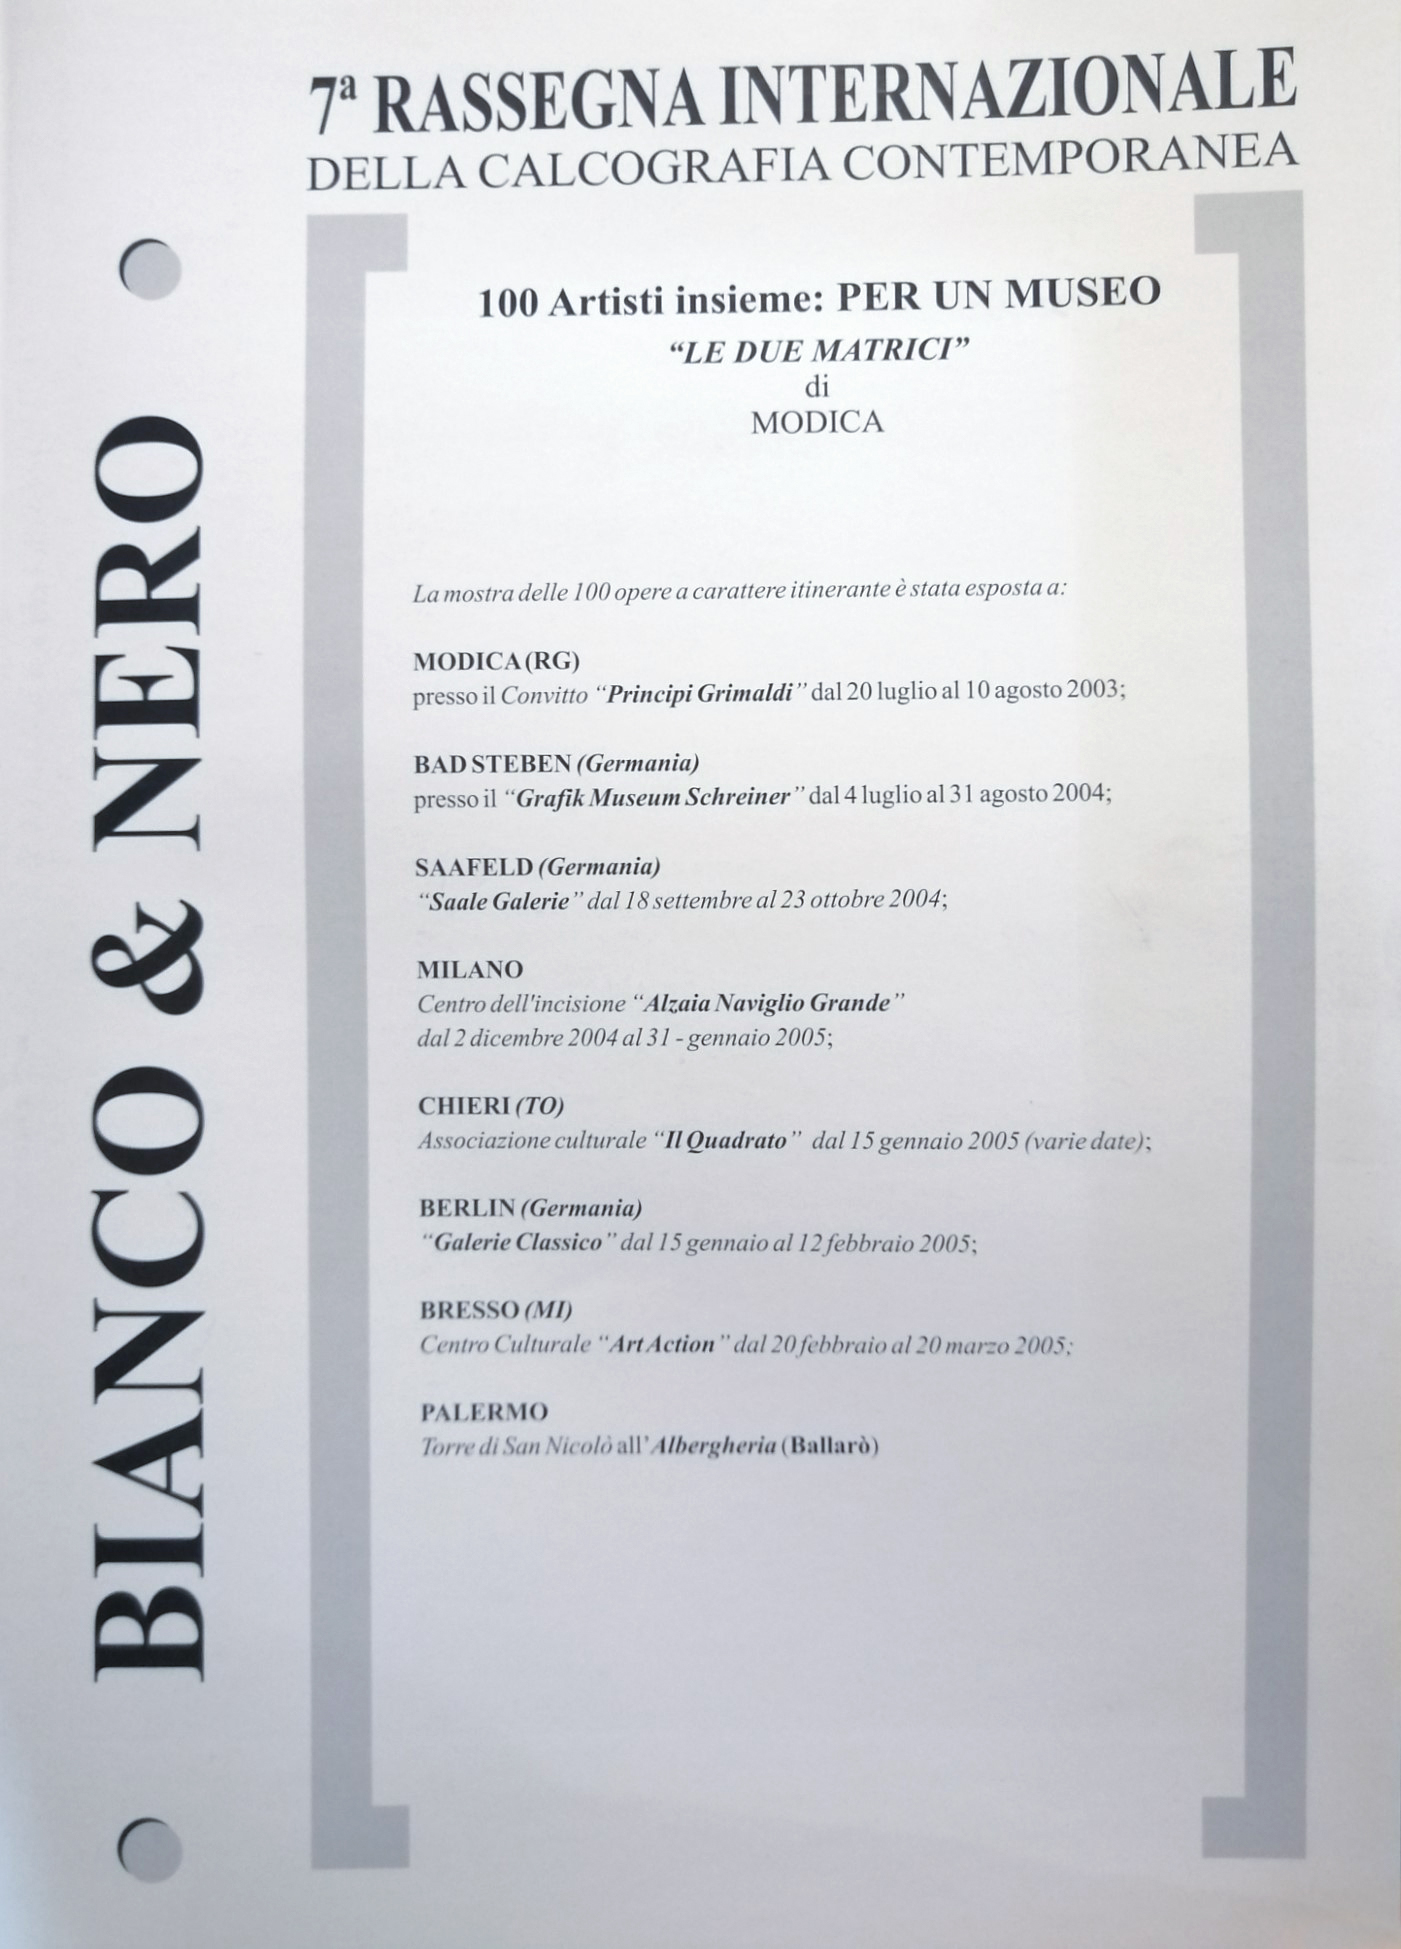 2003 2007 Bianco Nero.date  - Bibliography/ Catalogues